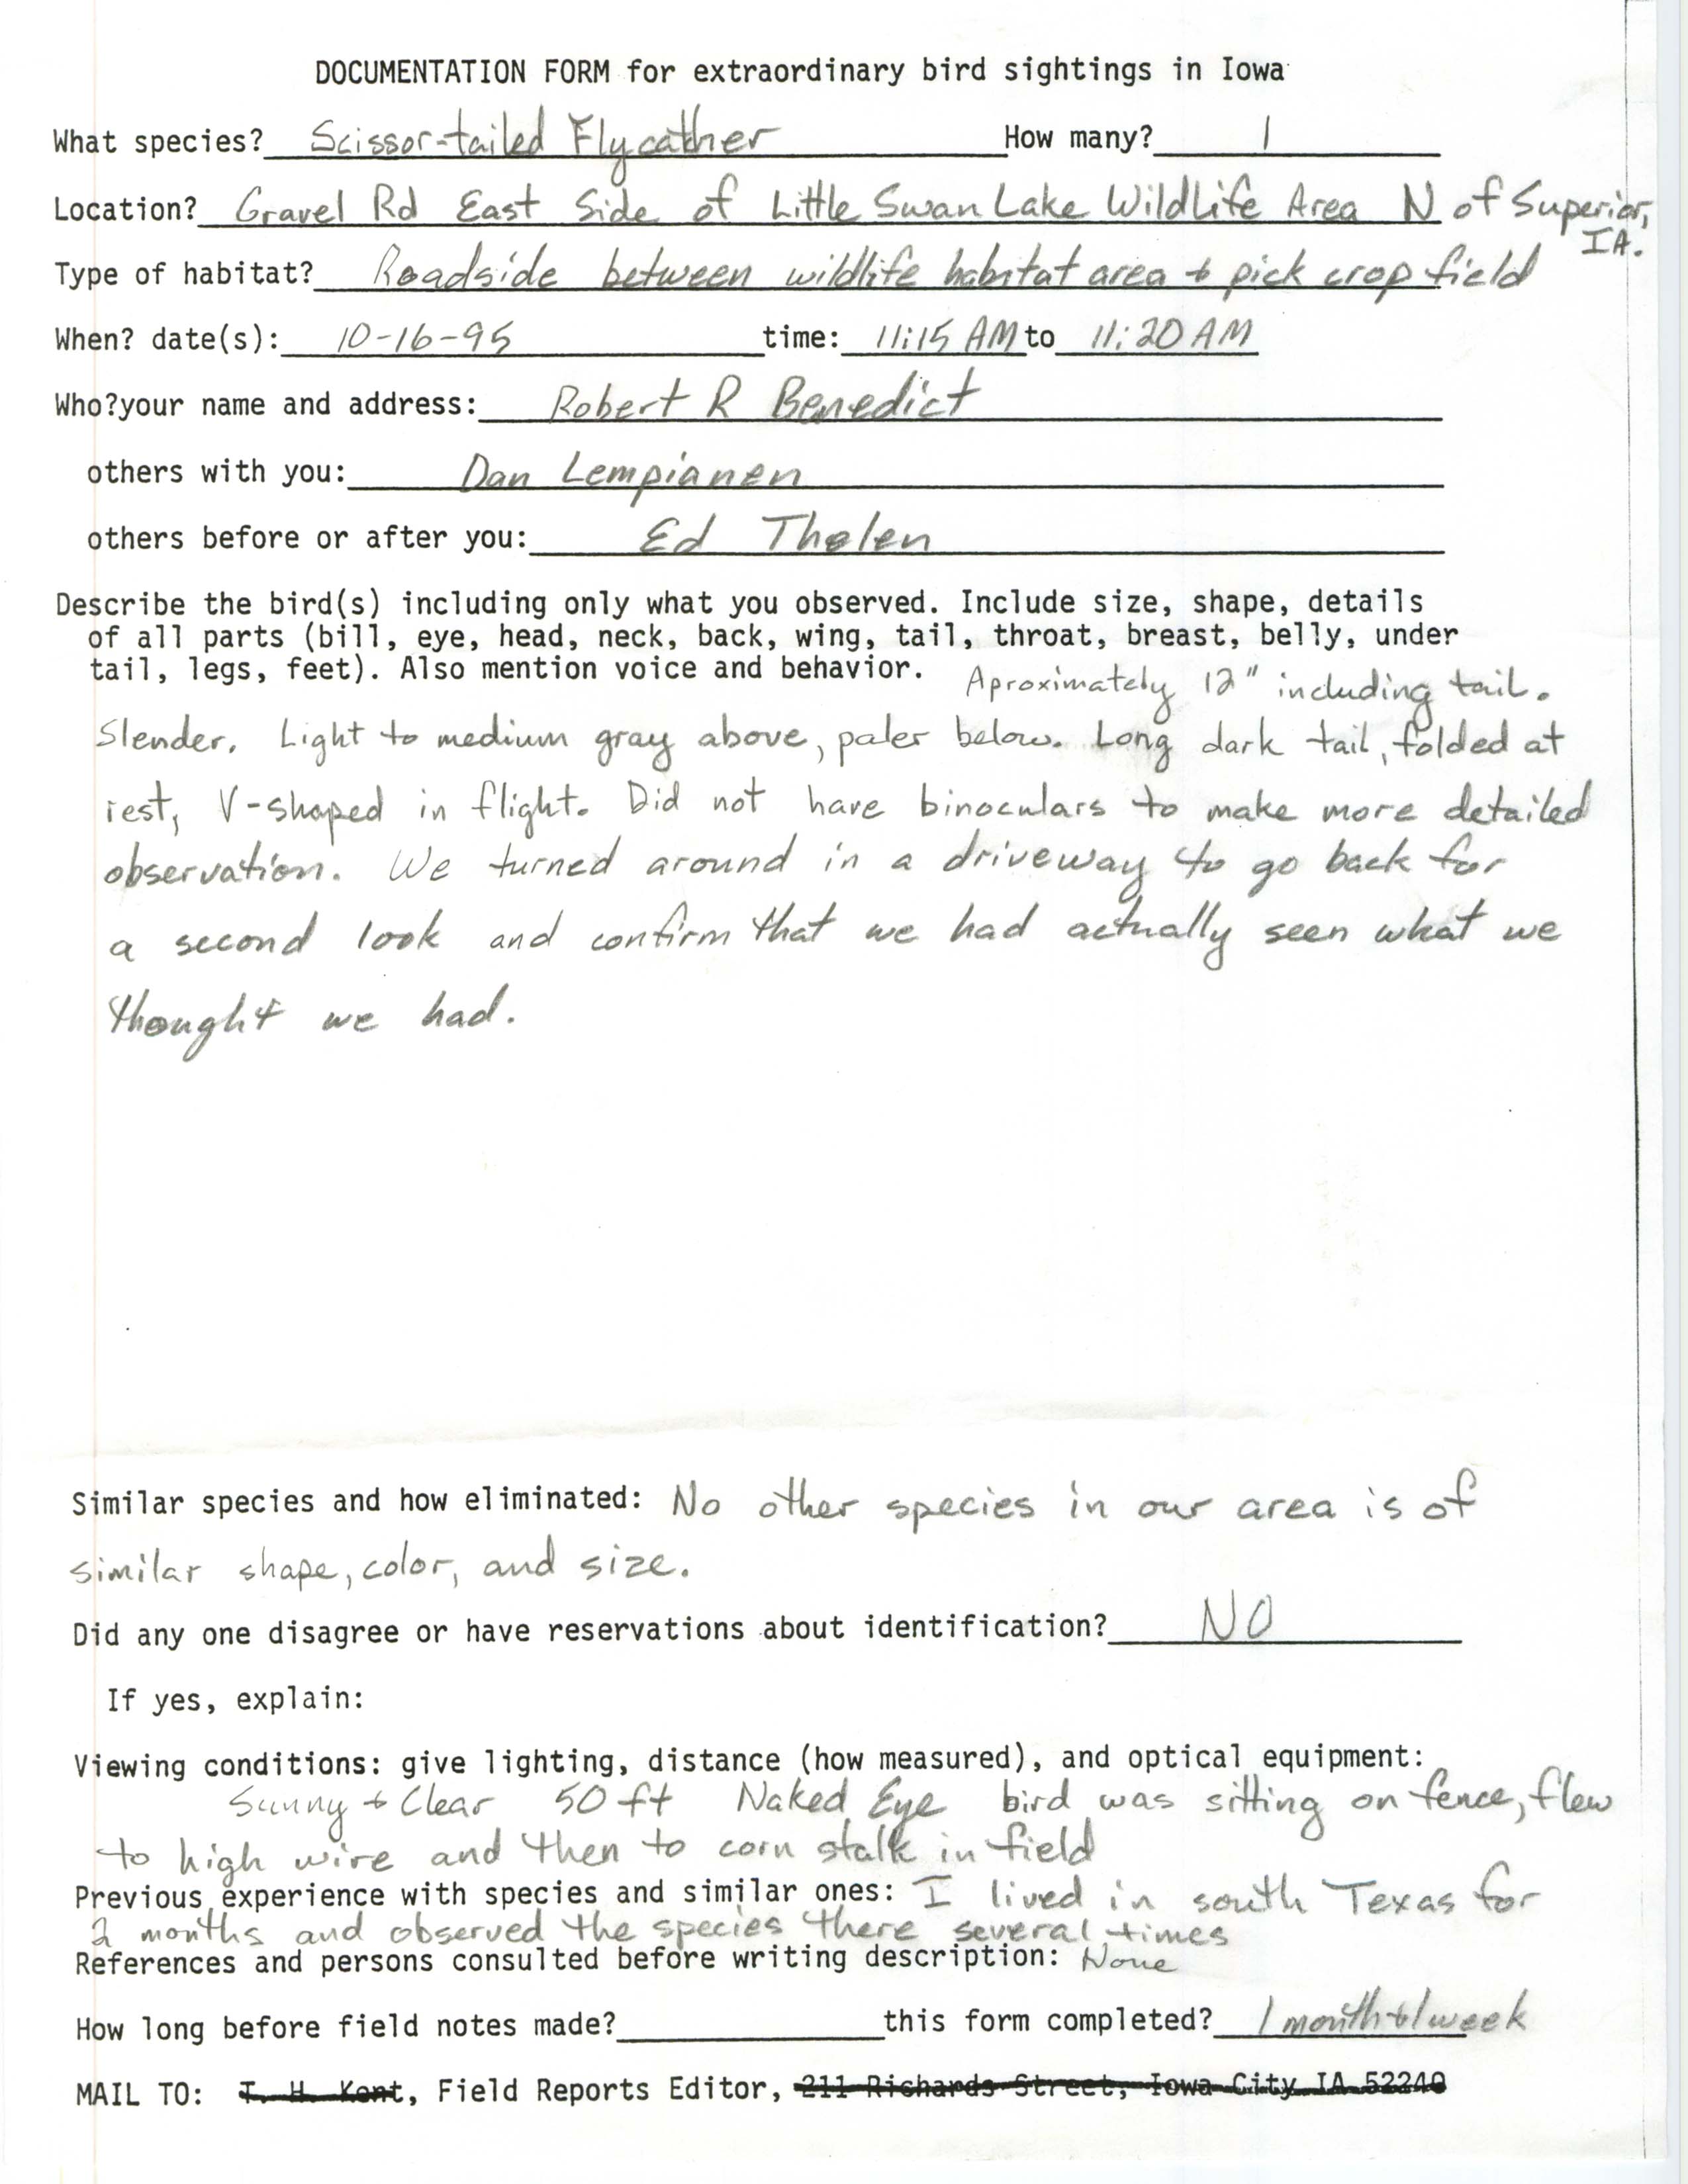 Rare bird documentation form for Scissor-tailed Flycatcher at Little Swan Lake Wildlife Area, 1995